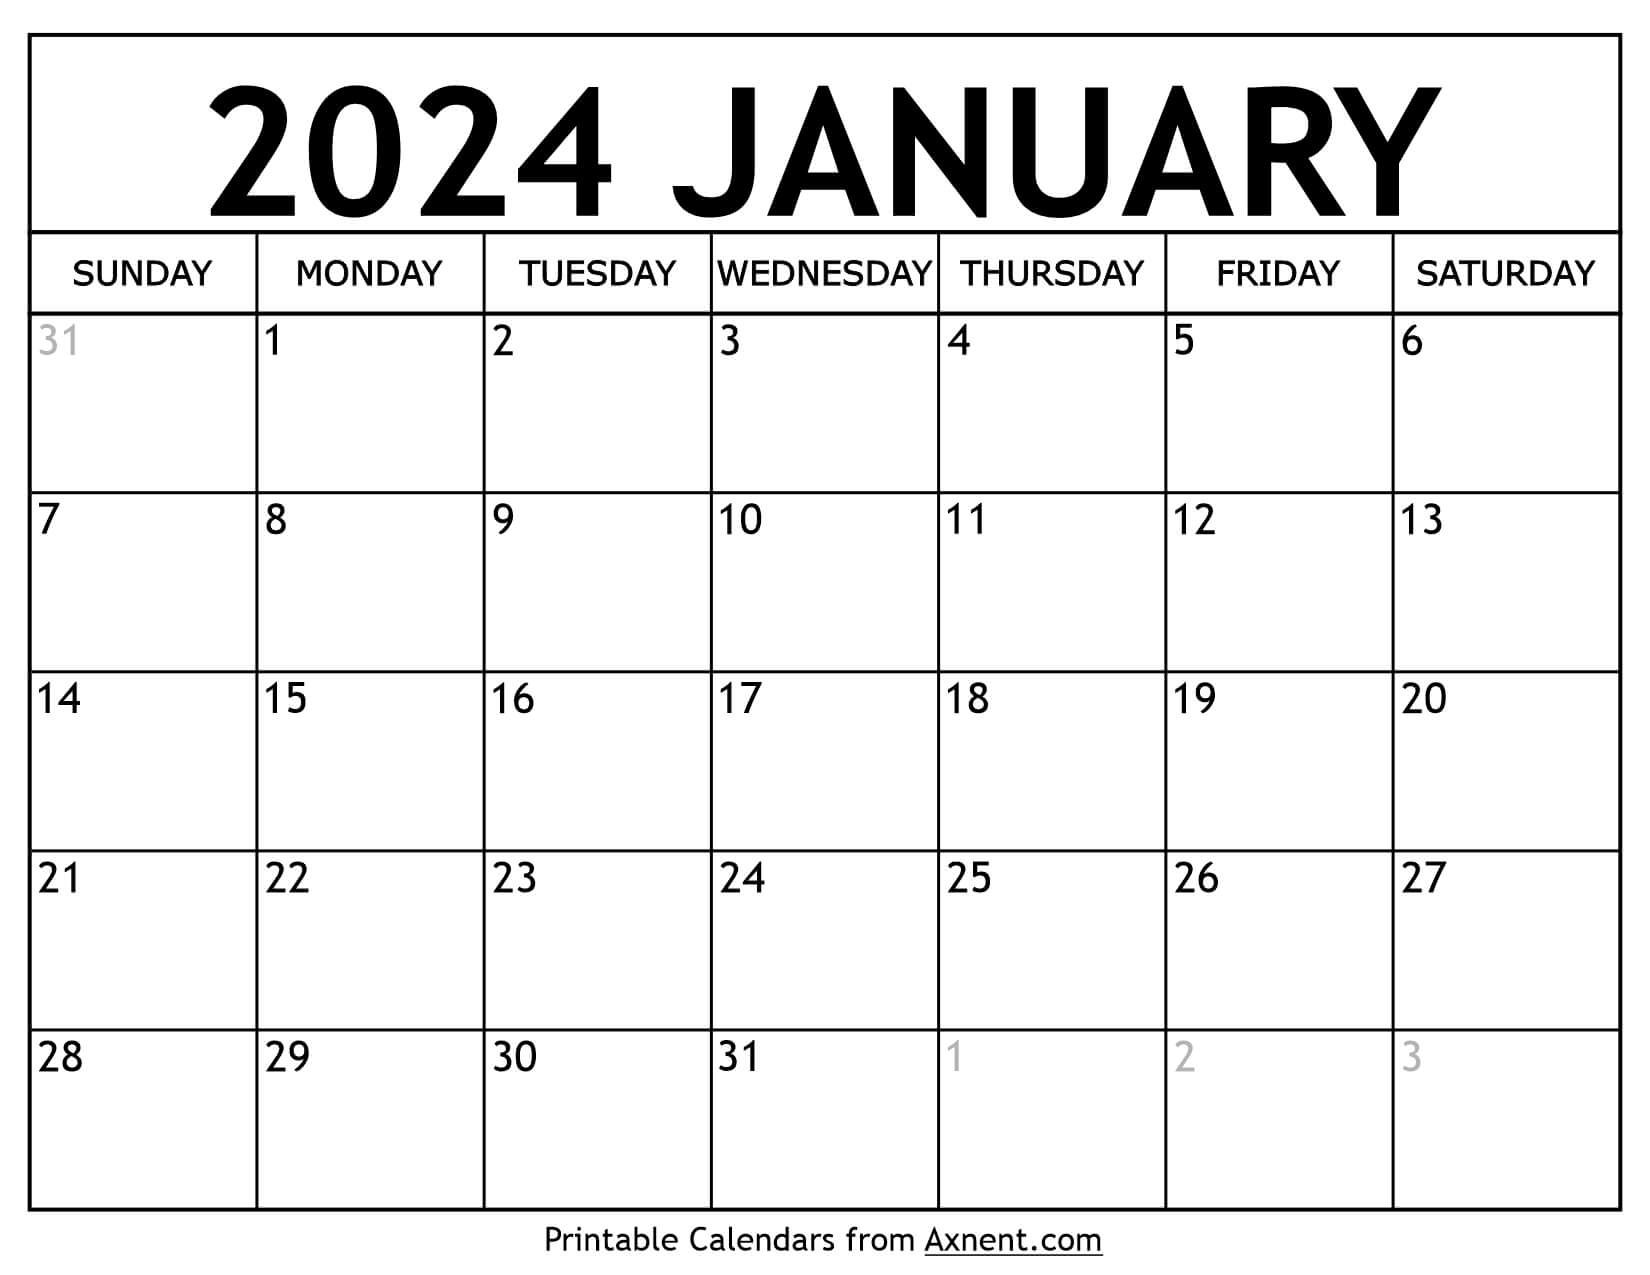 Printable January 2024 Calendar Template - Print Now for Free Jan 2024 Calendar Printable